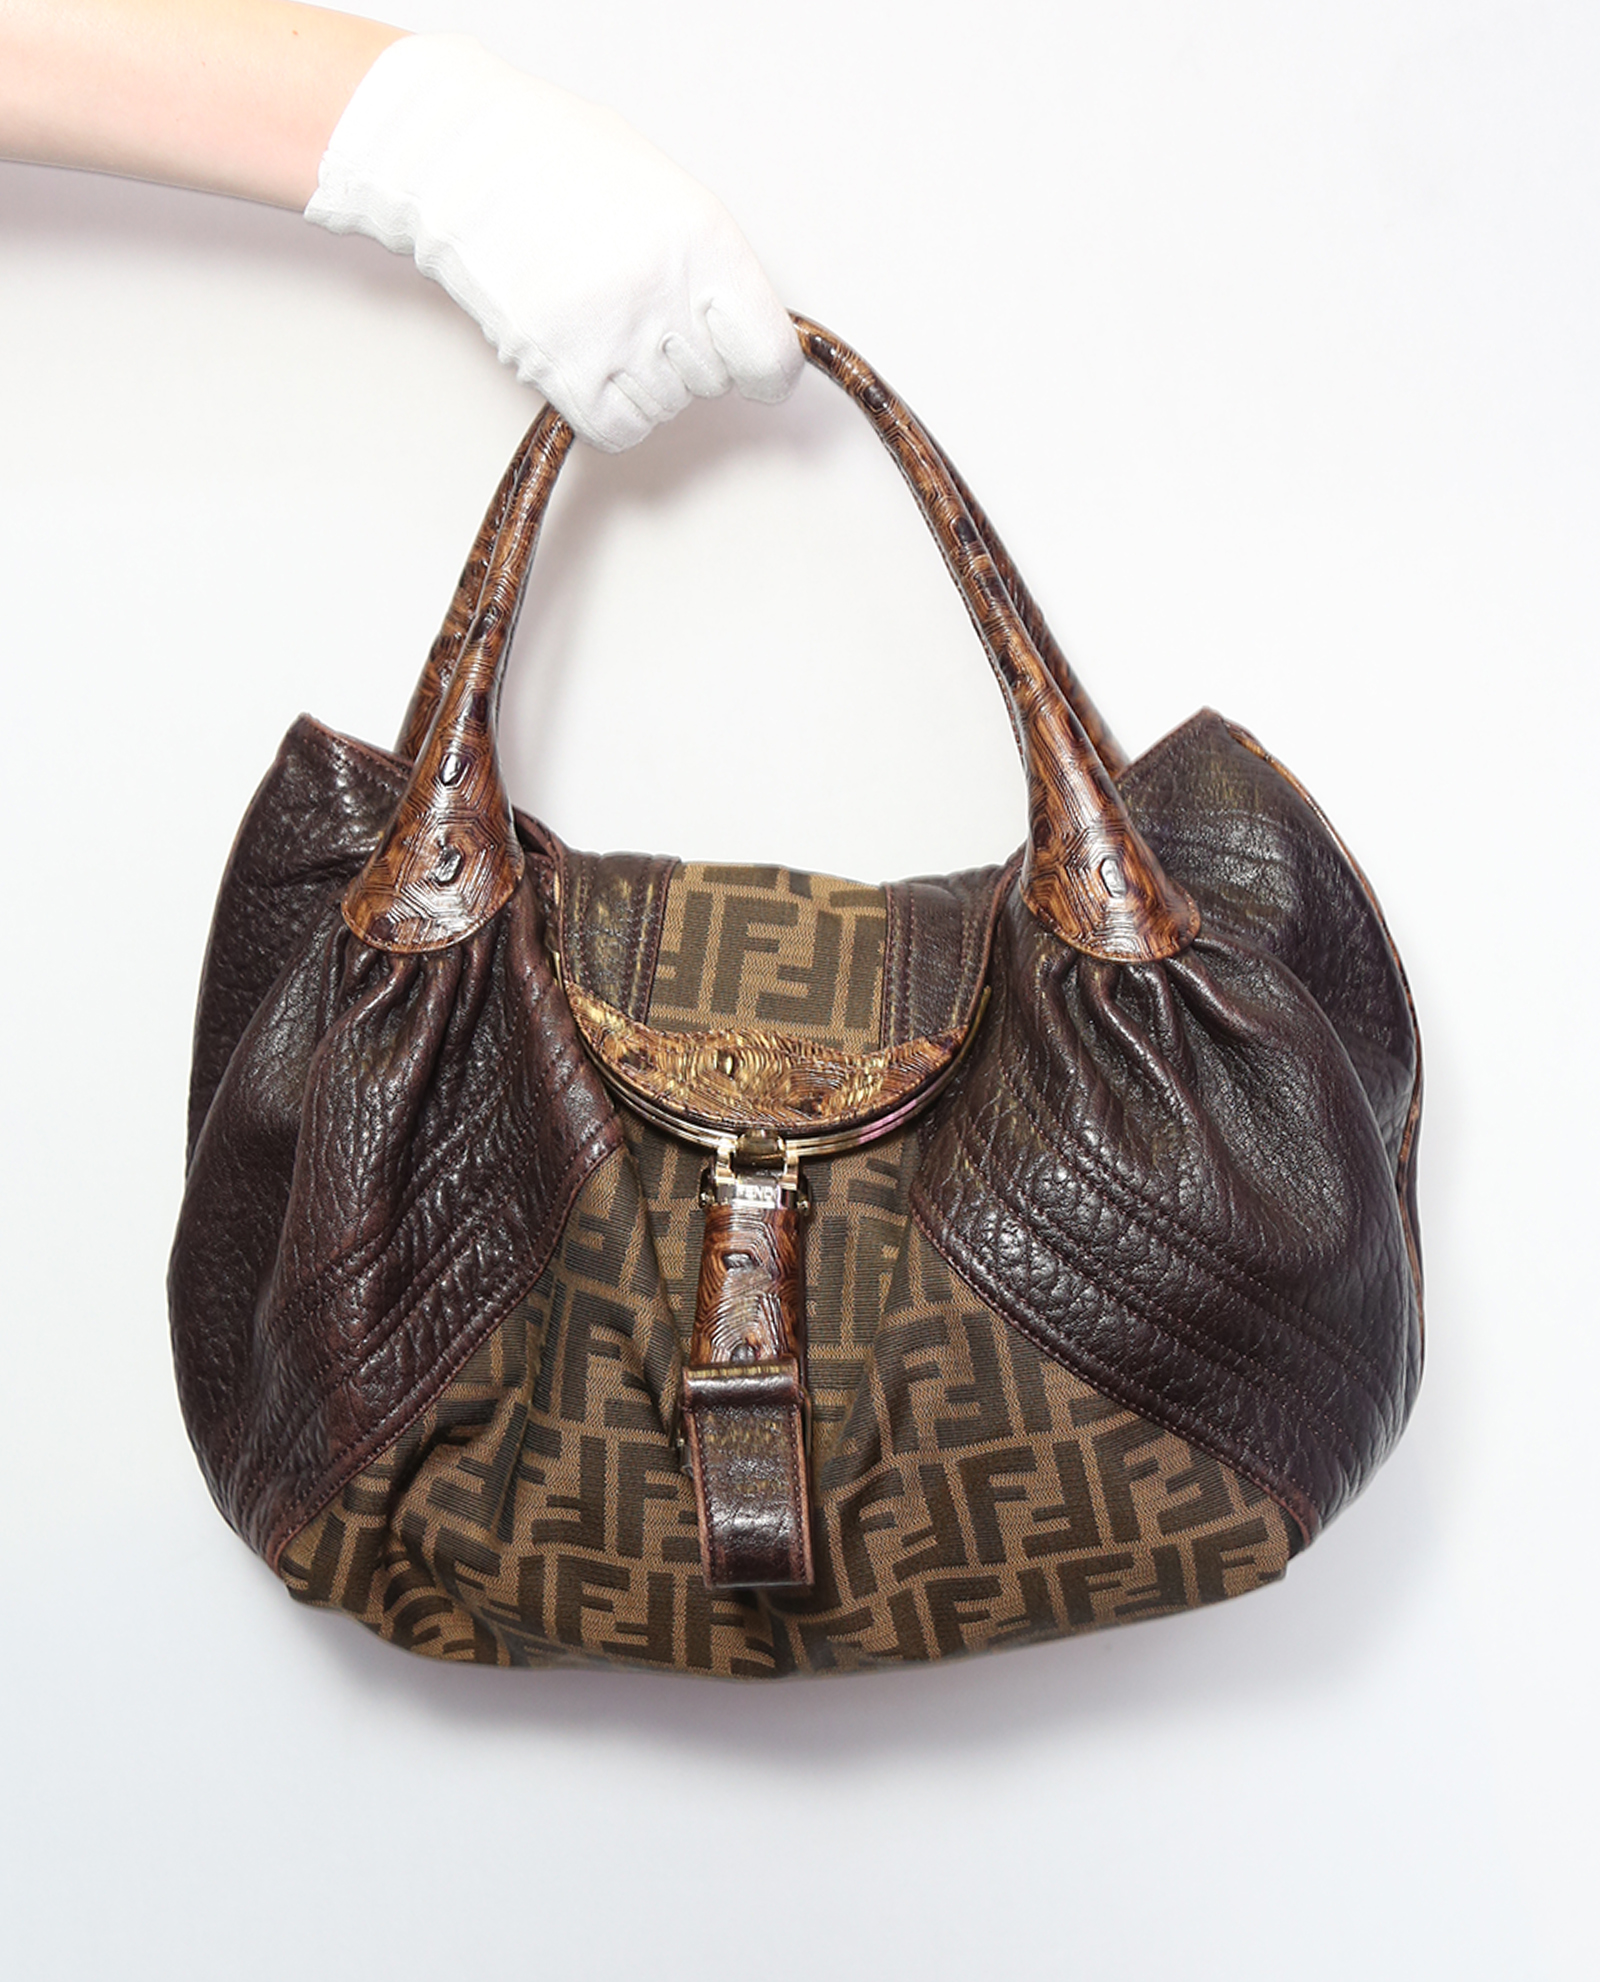 FENDI Spy Bag, - Vintage Mode und Accessoires 2020/12/07 - Realized price:  EUR 1,000 - Dorotheum